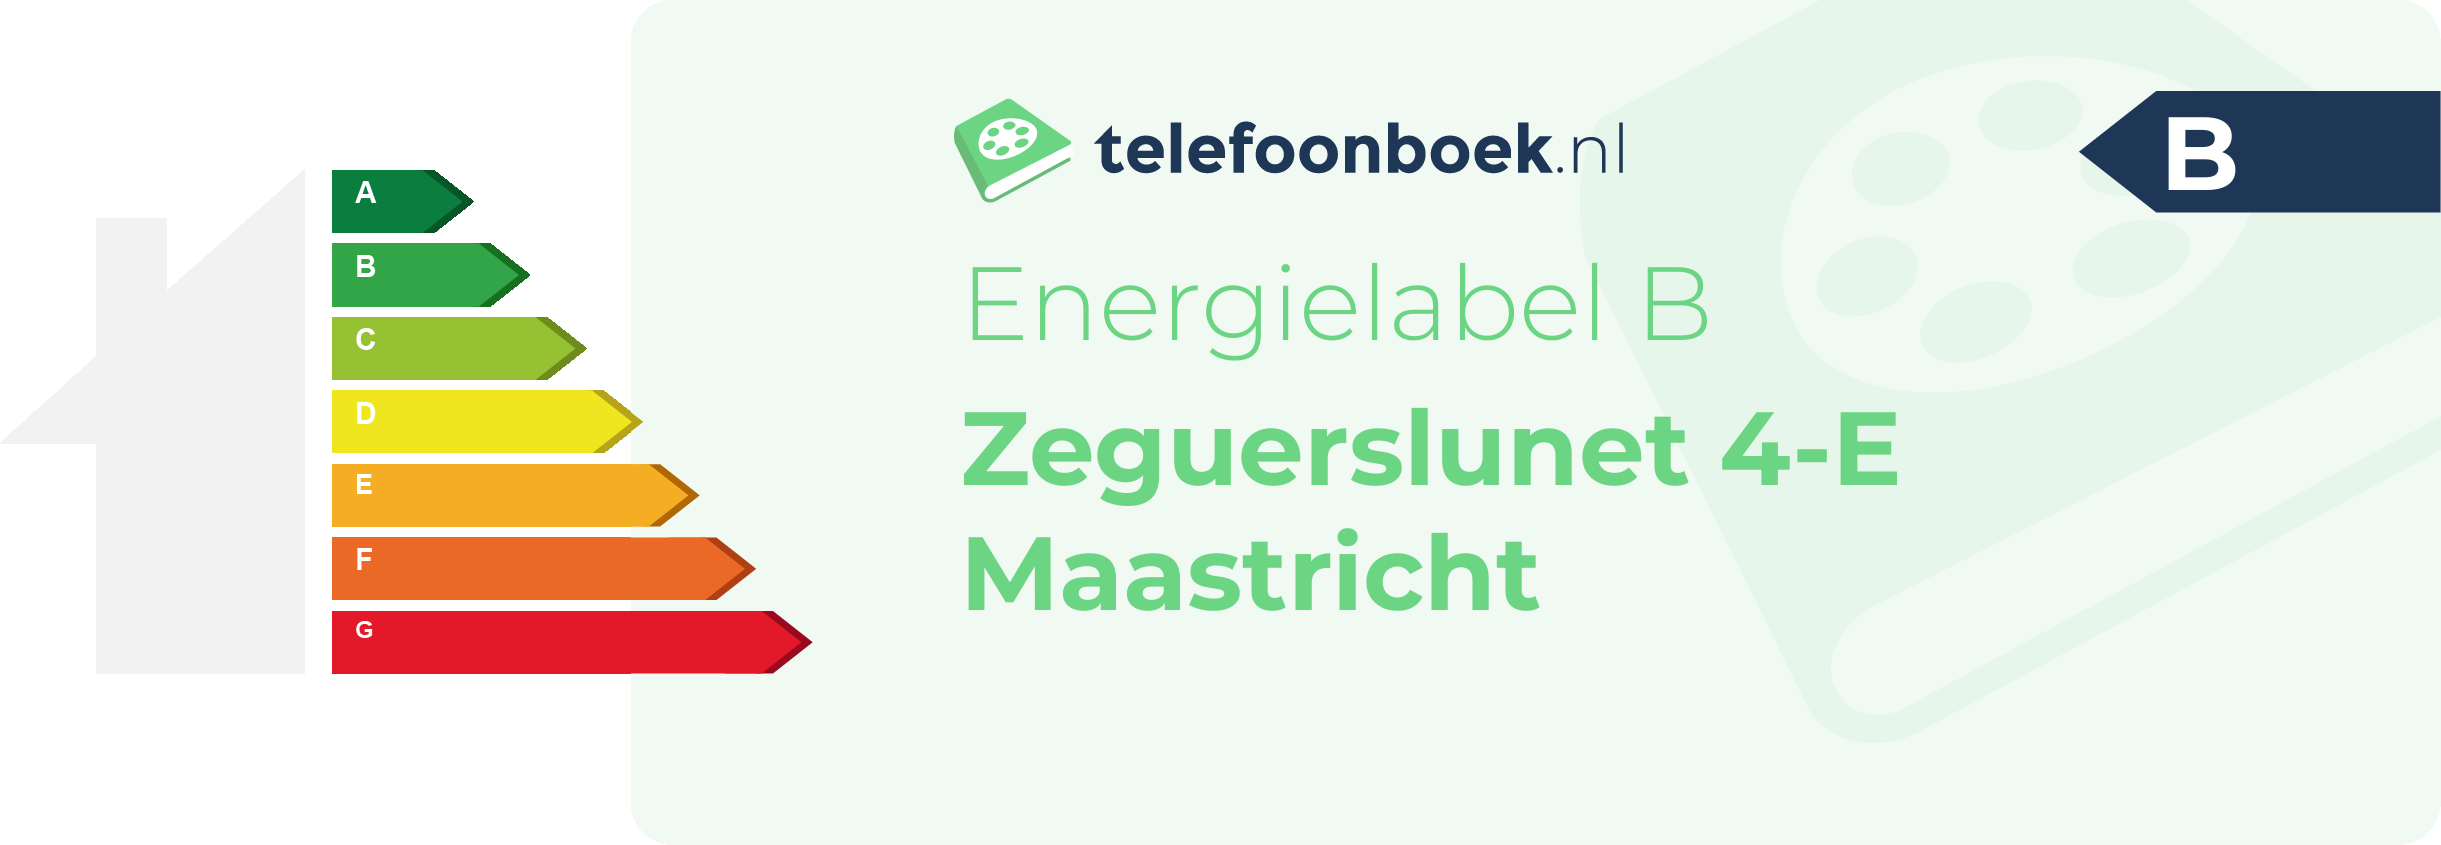 Energielabel Zeguerslunet 4-E Maastricht